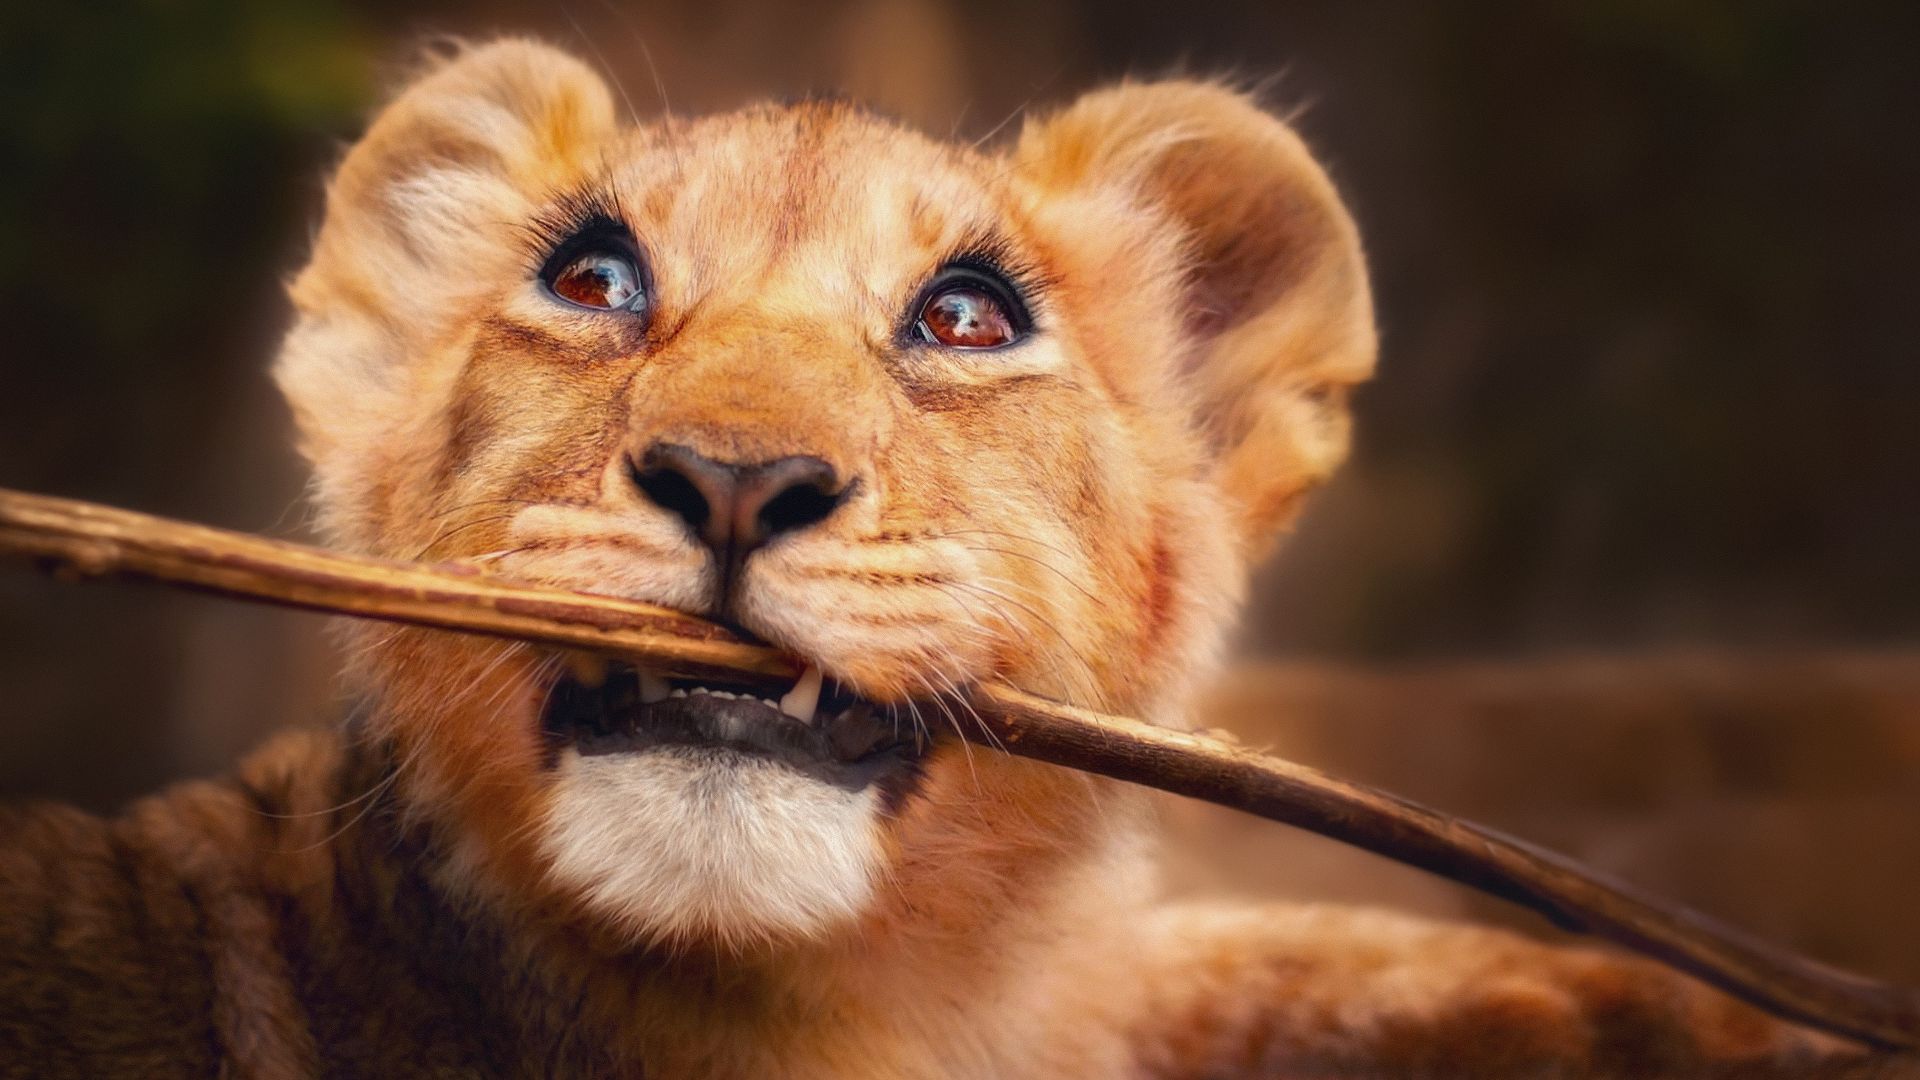 Lion, funny animals, 4K (horizontal)